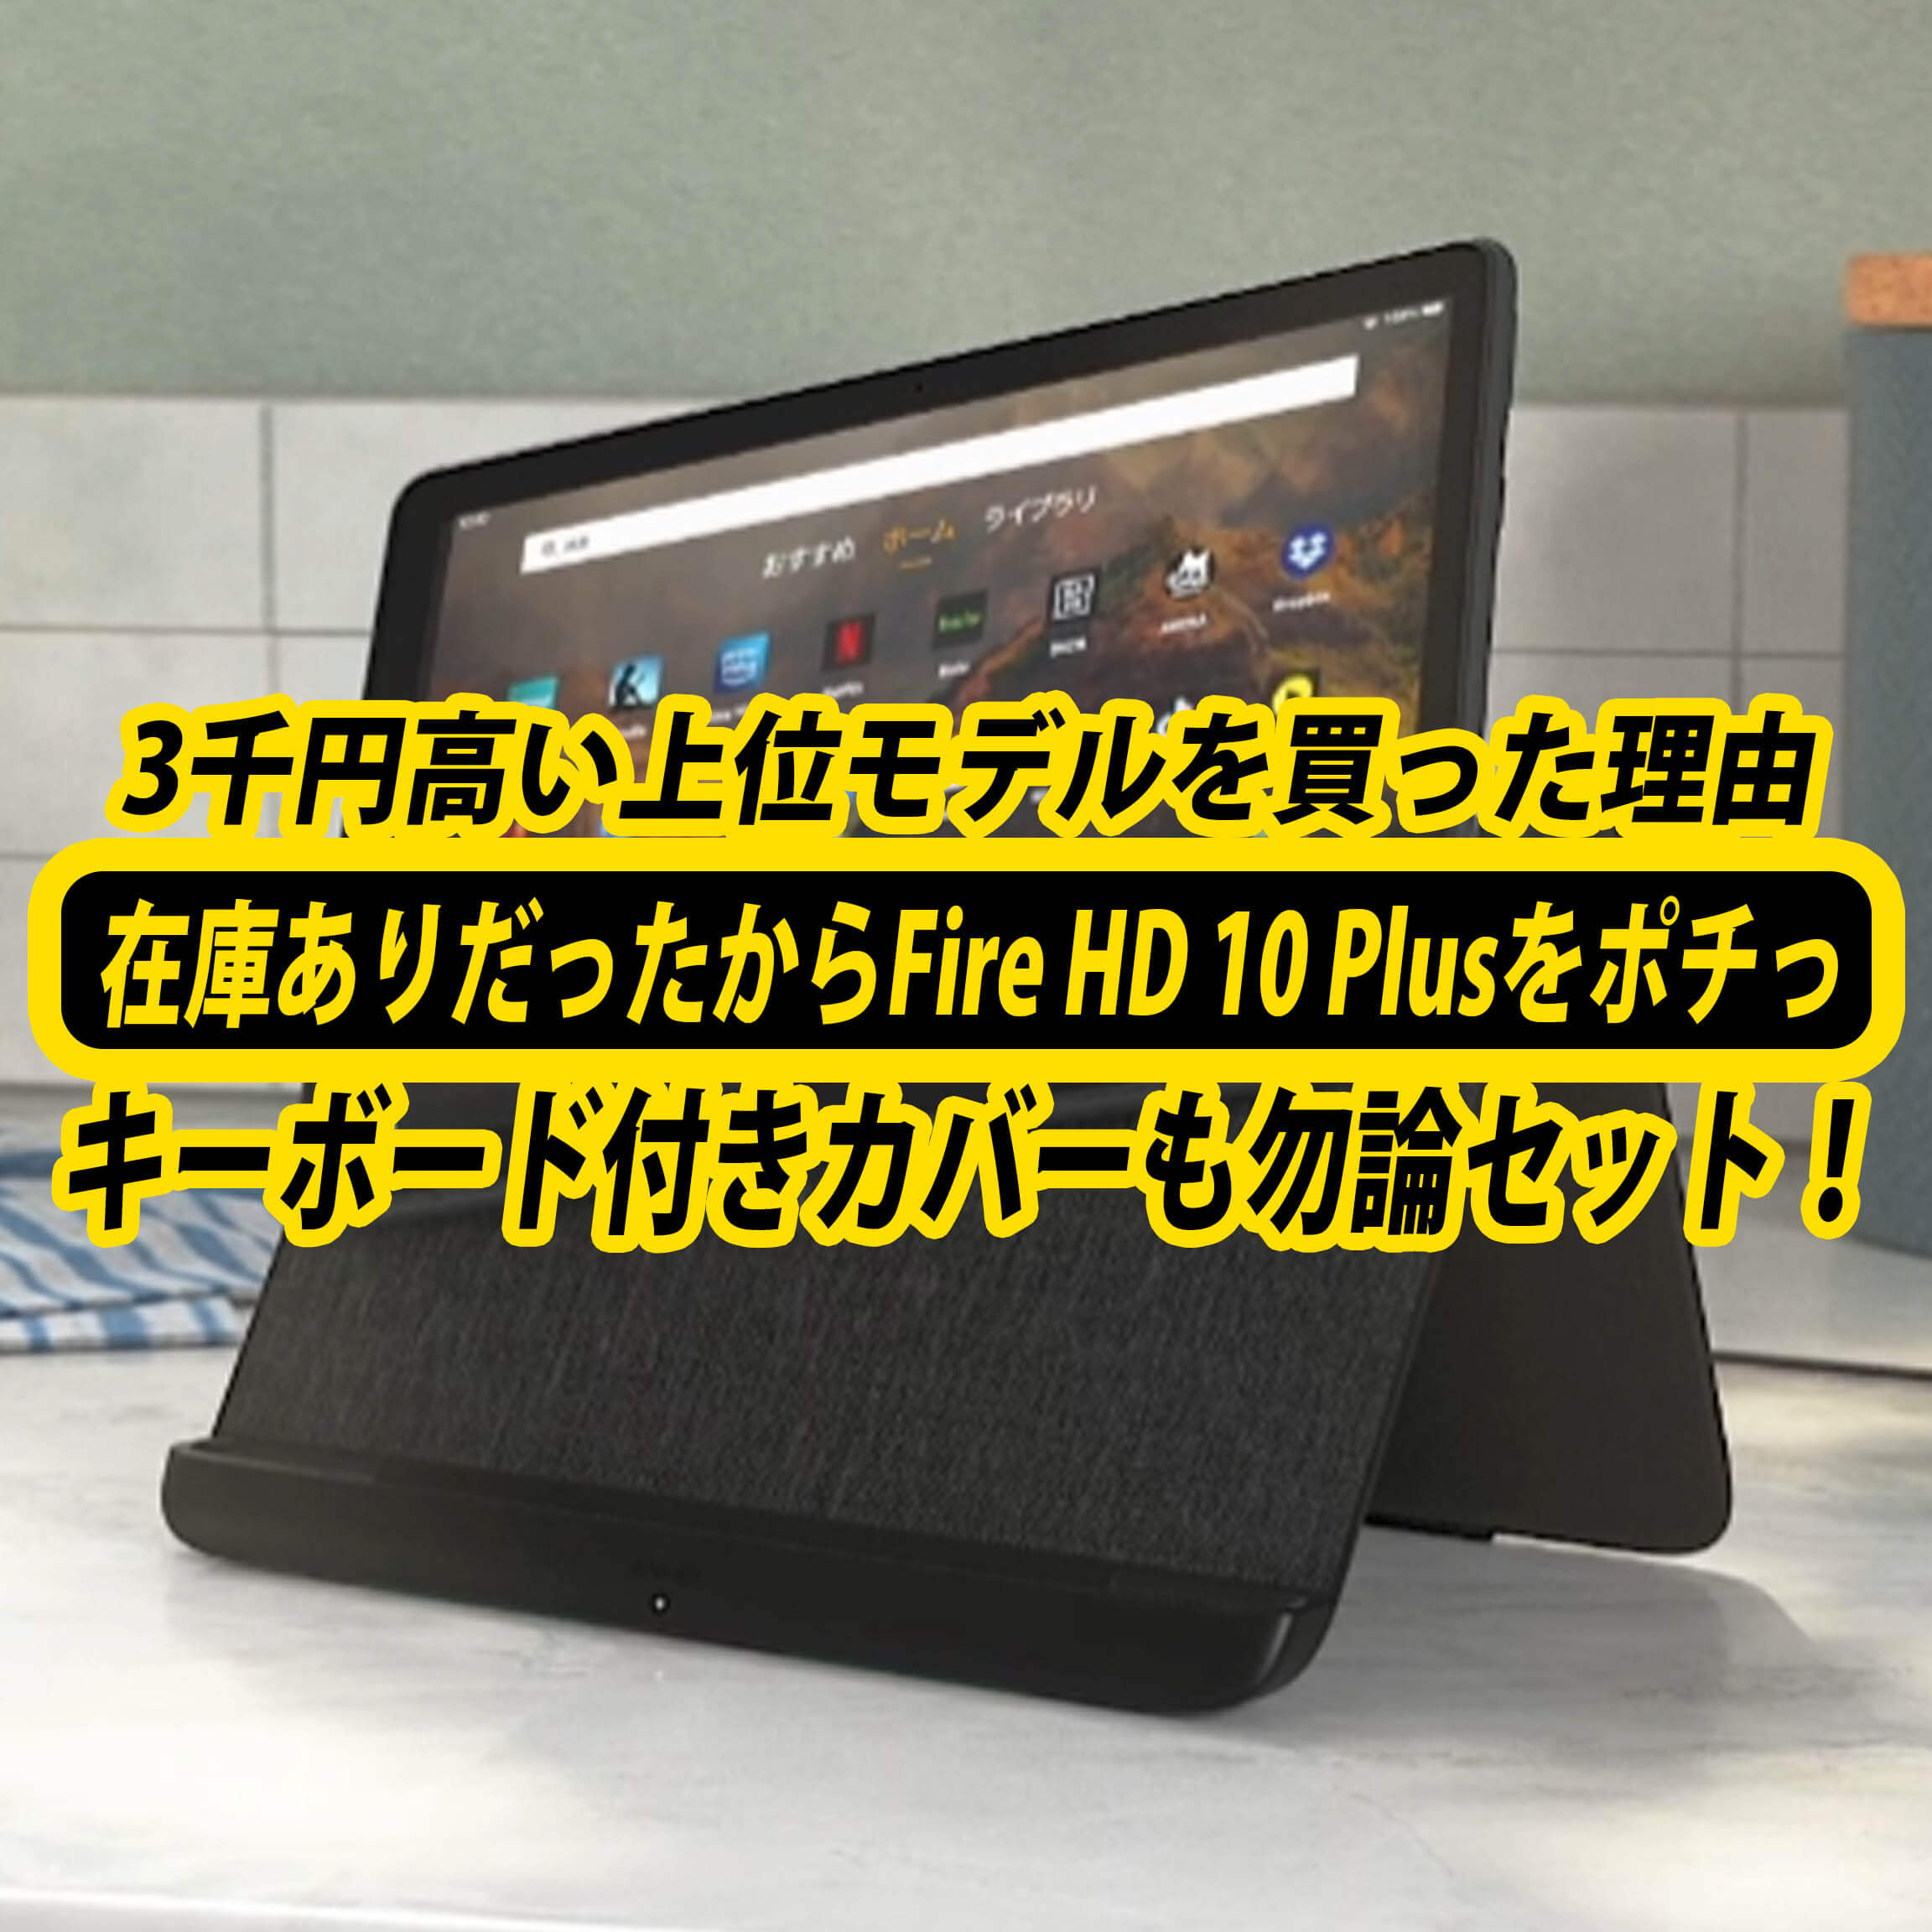 AmazonでFire HD 10 Plusが在庫ありだったから思わずポチっ！3千円高い 